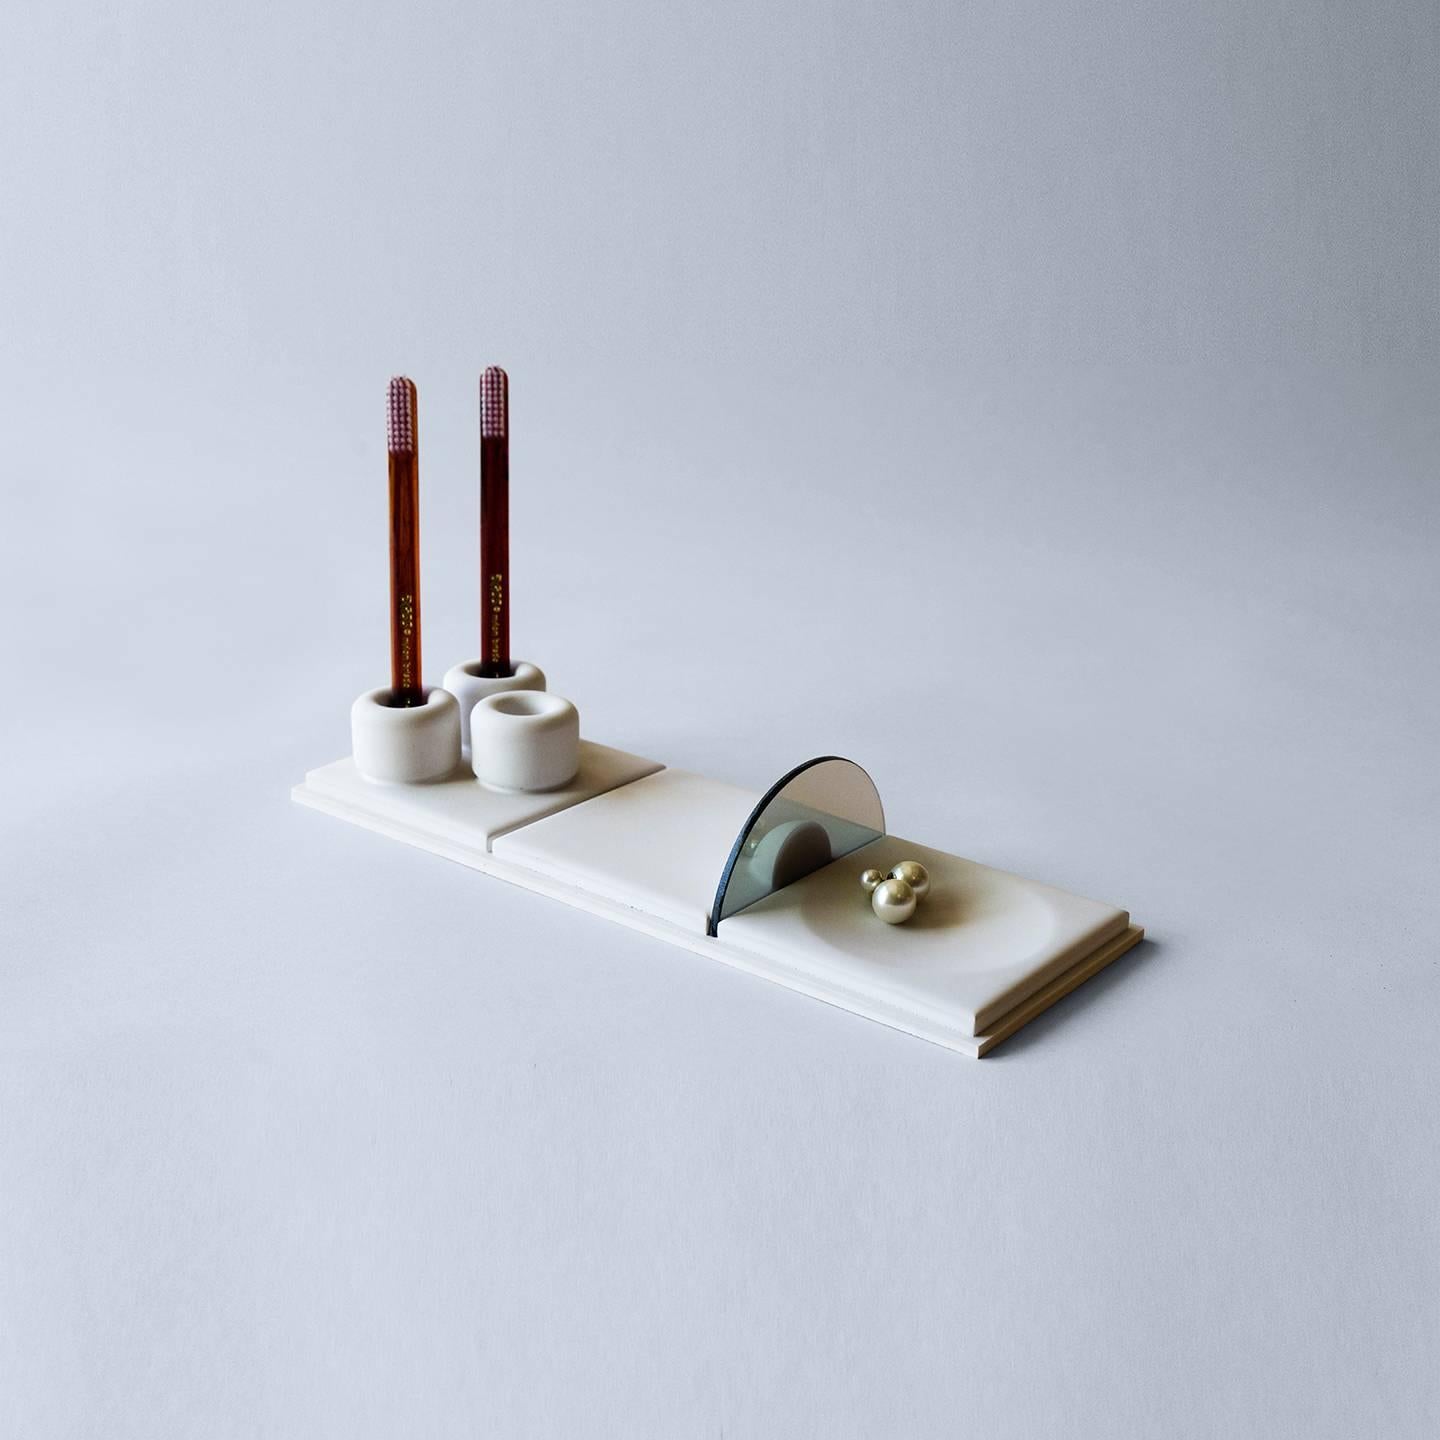 American Salle de Bain - S - Handmade Cast Concrete Tray in White by UMÉ Studio For Sale